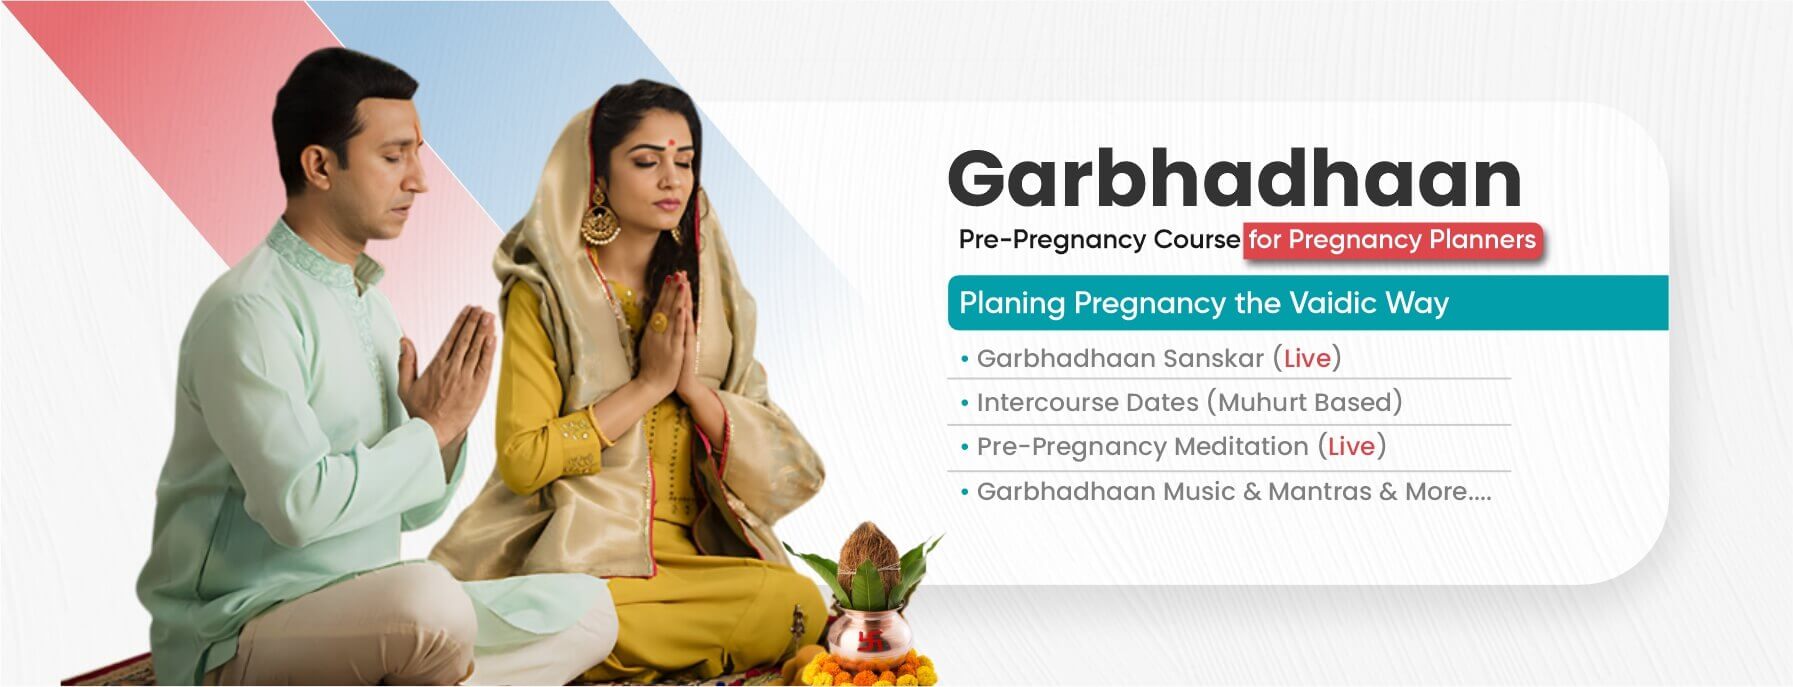 Garbh sanskar during pregnancy